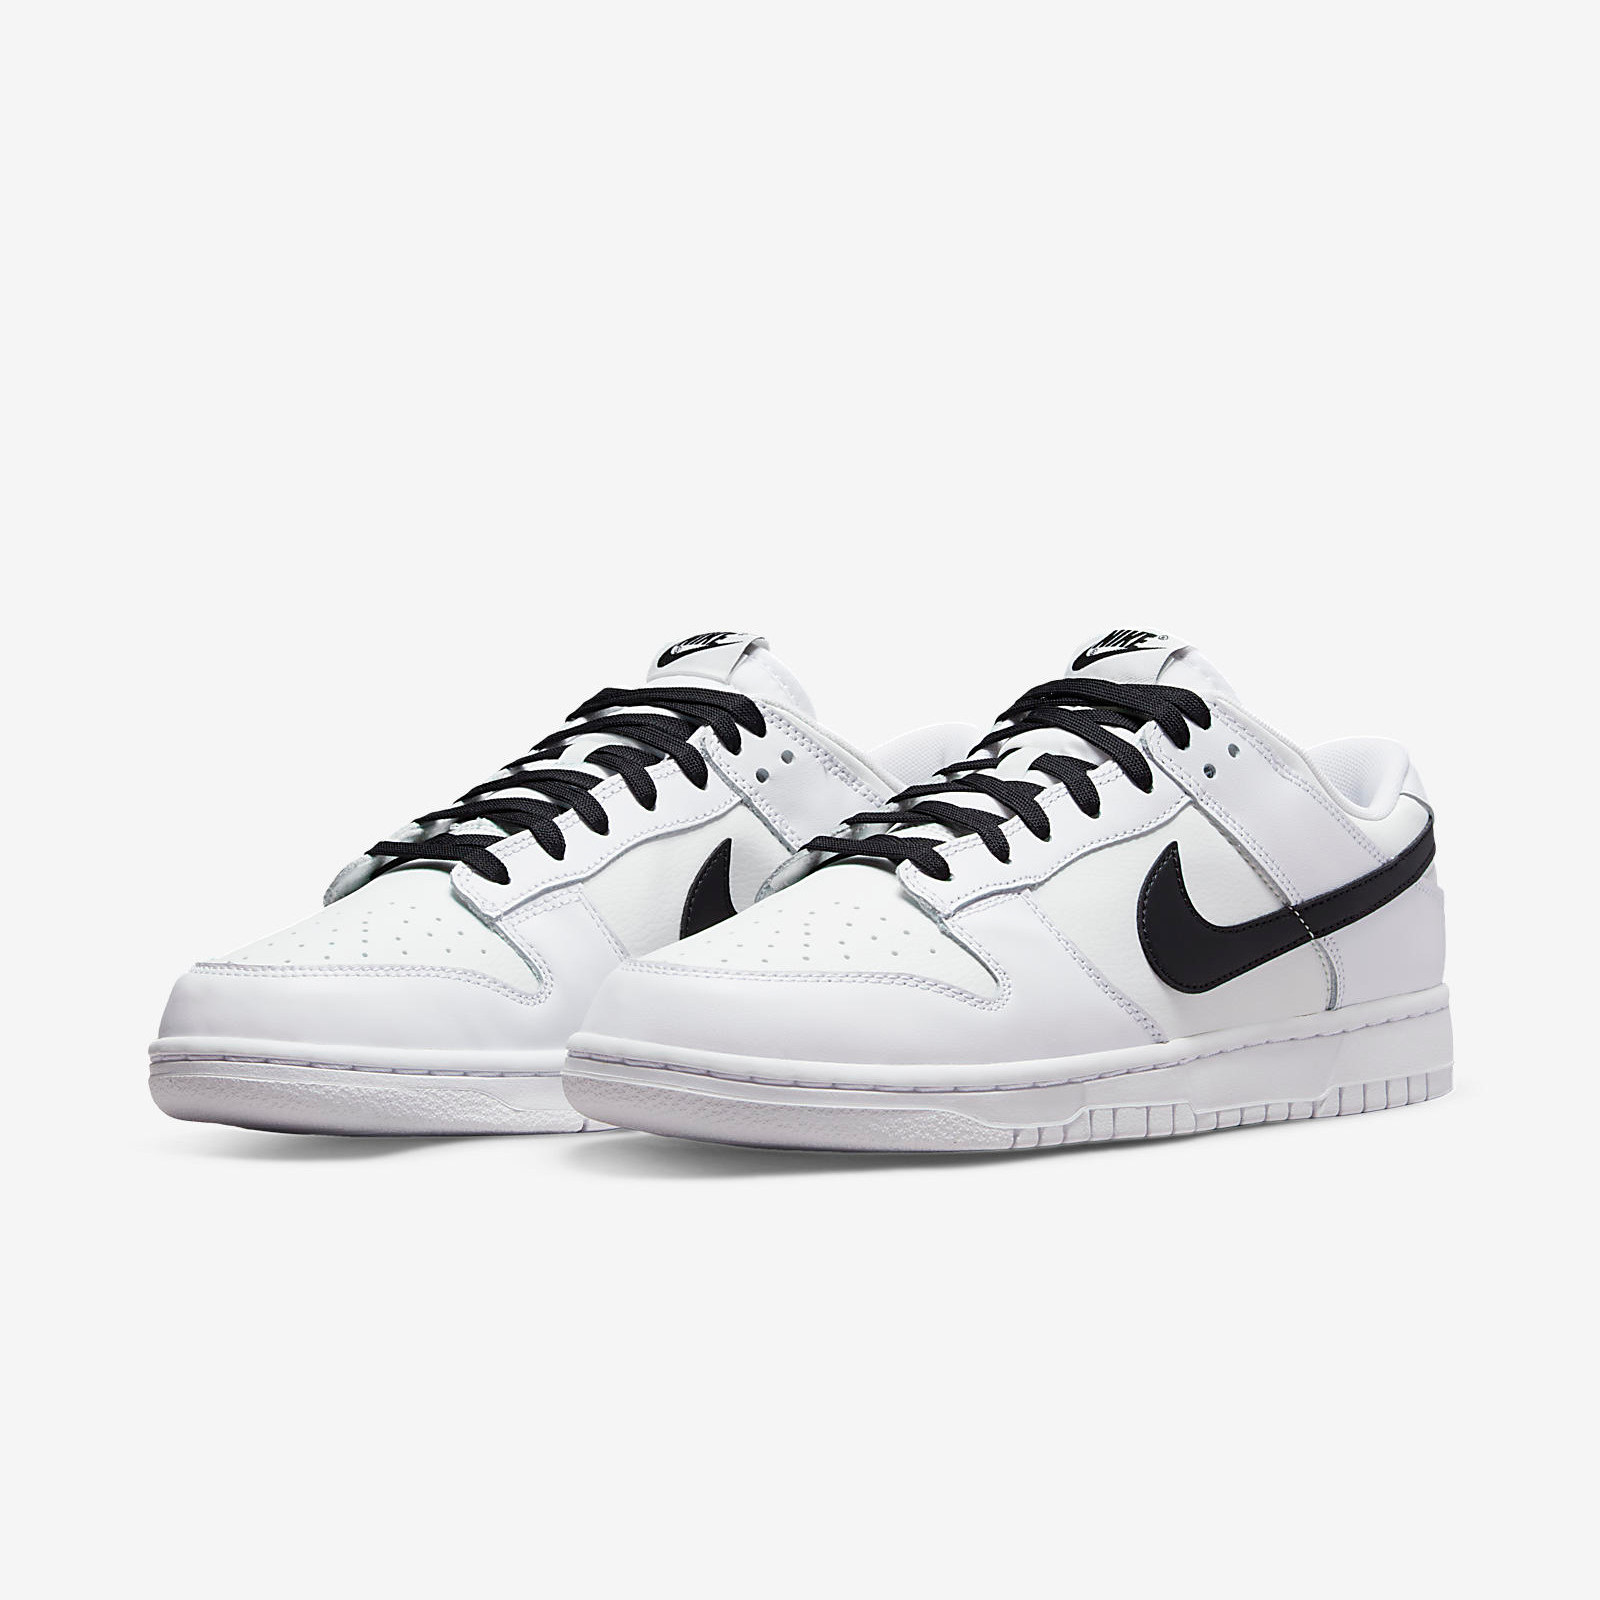 Nike Dunk Low
White / Black